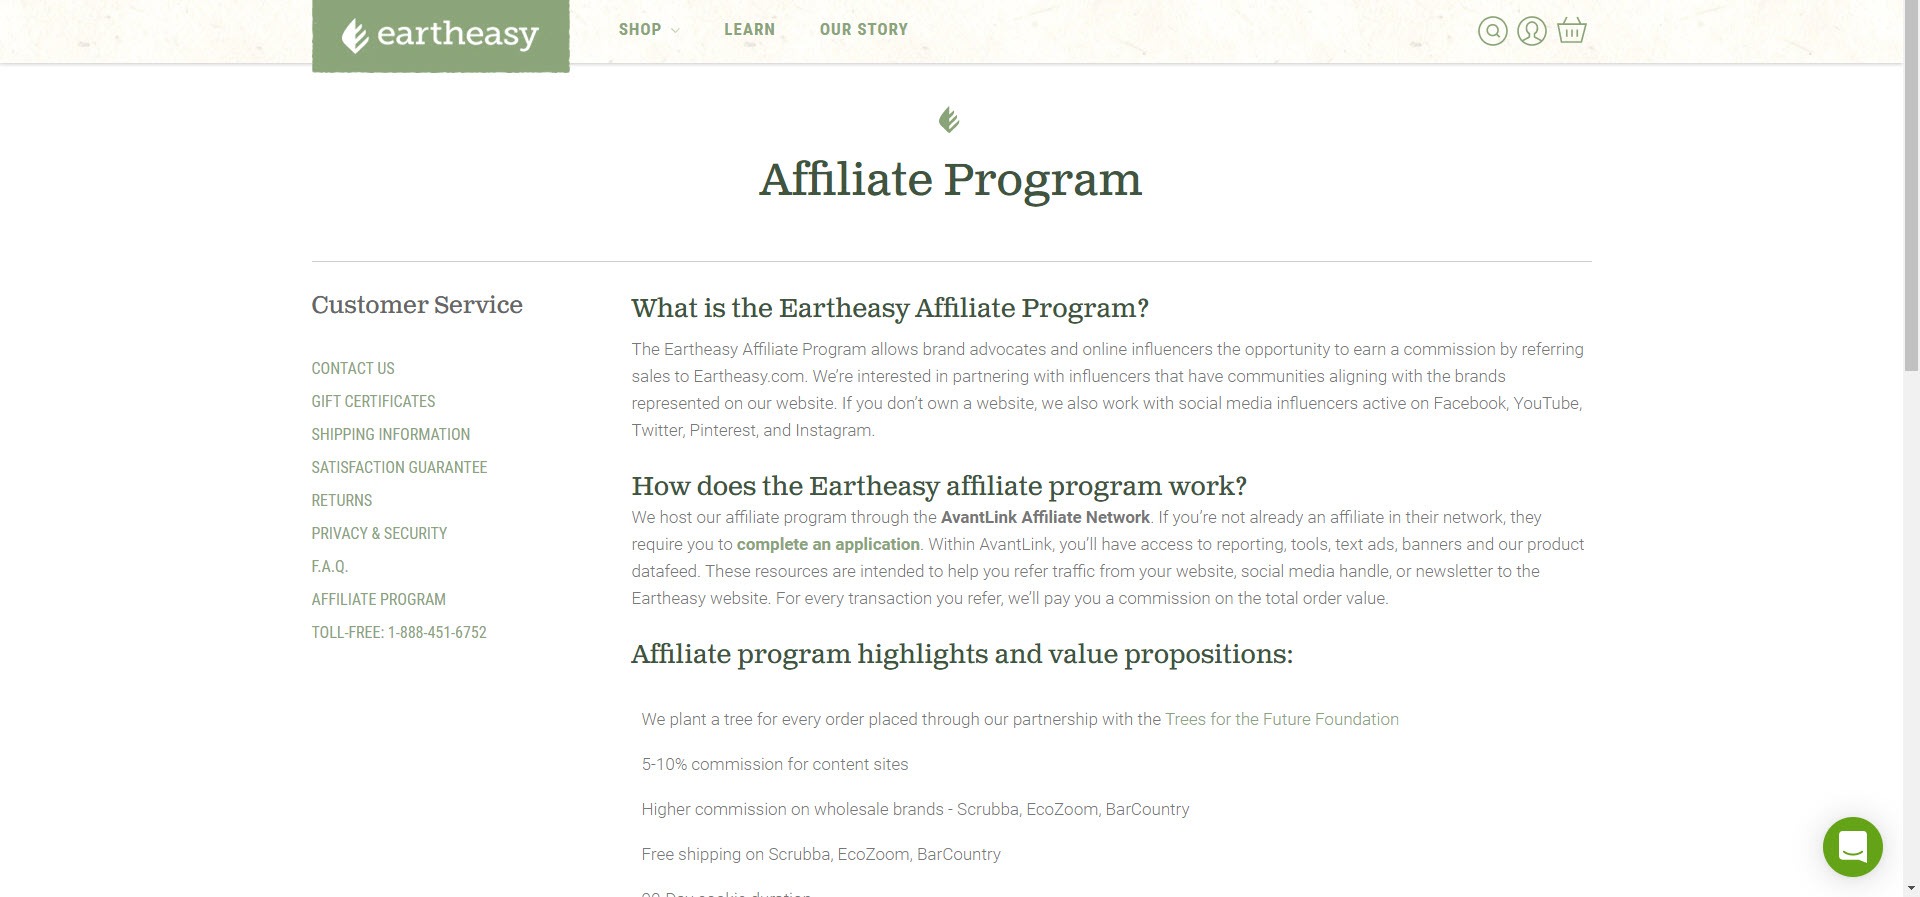 eco friendly affiliate programs - eartheasy Affiliate